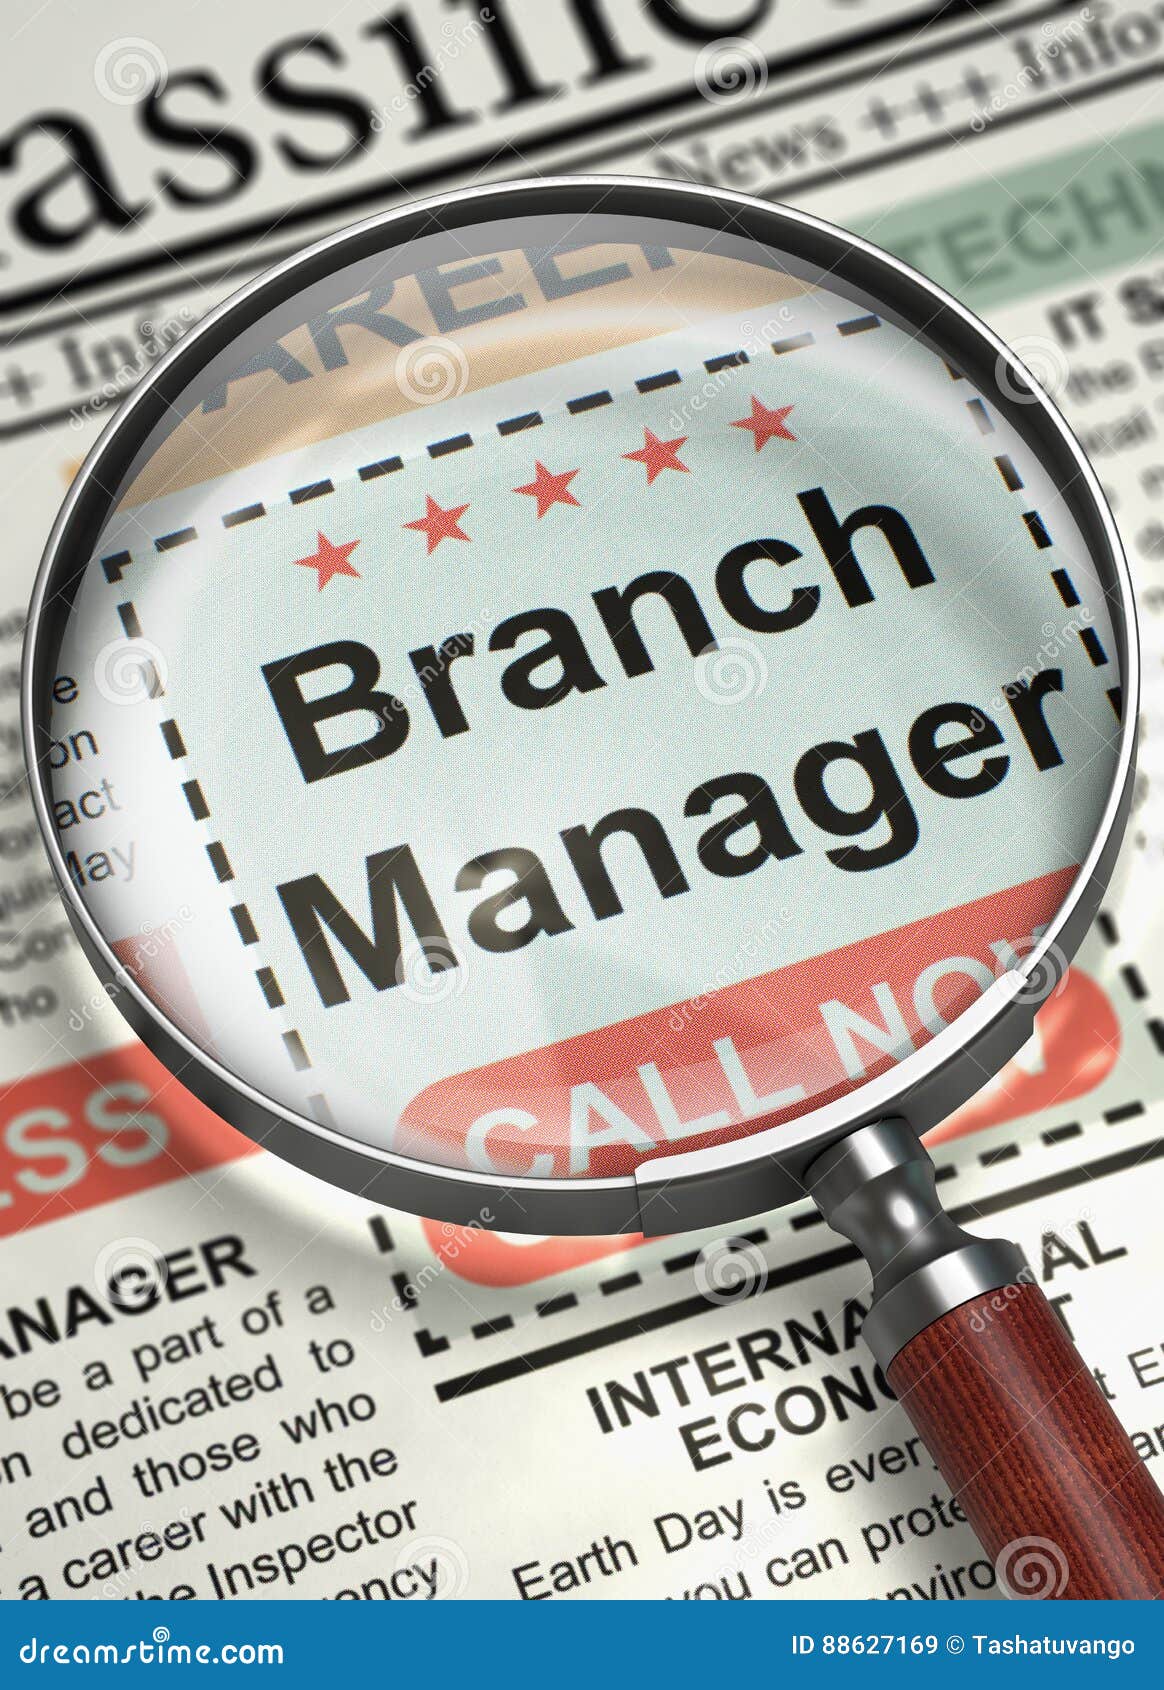 Image result for hiring Branch Manager